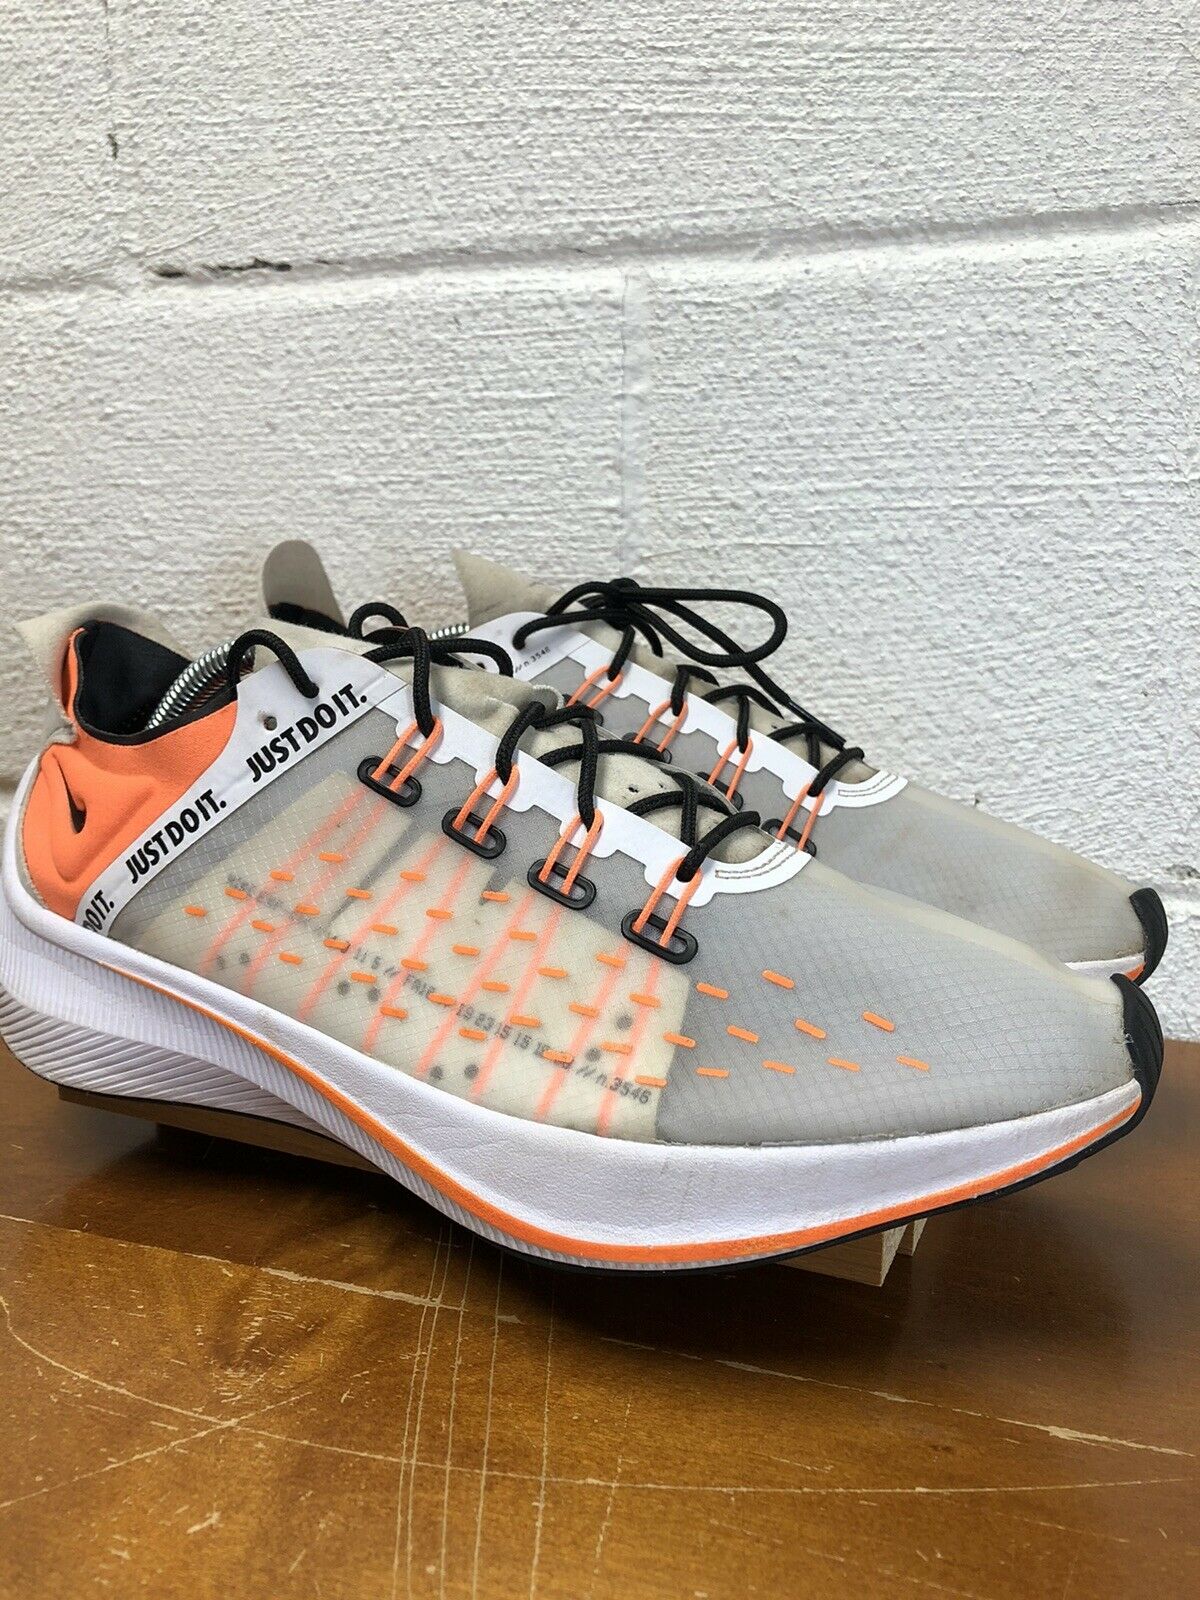 Nike EXP-X14 JUST DO IT. Men's Running Shoes White Orange AO3095-100 Sz 10.5